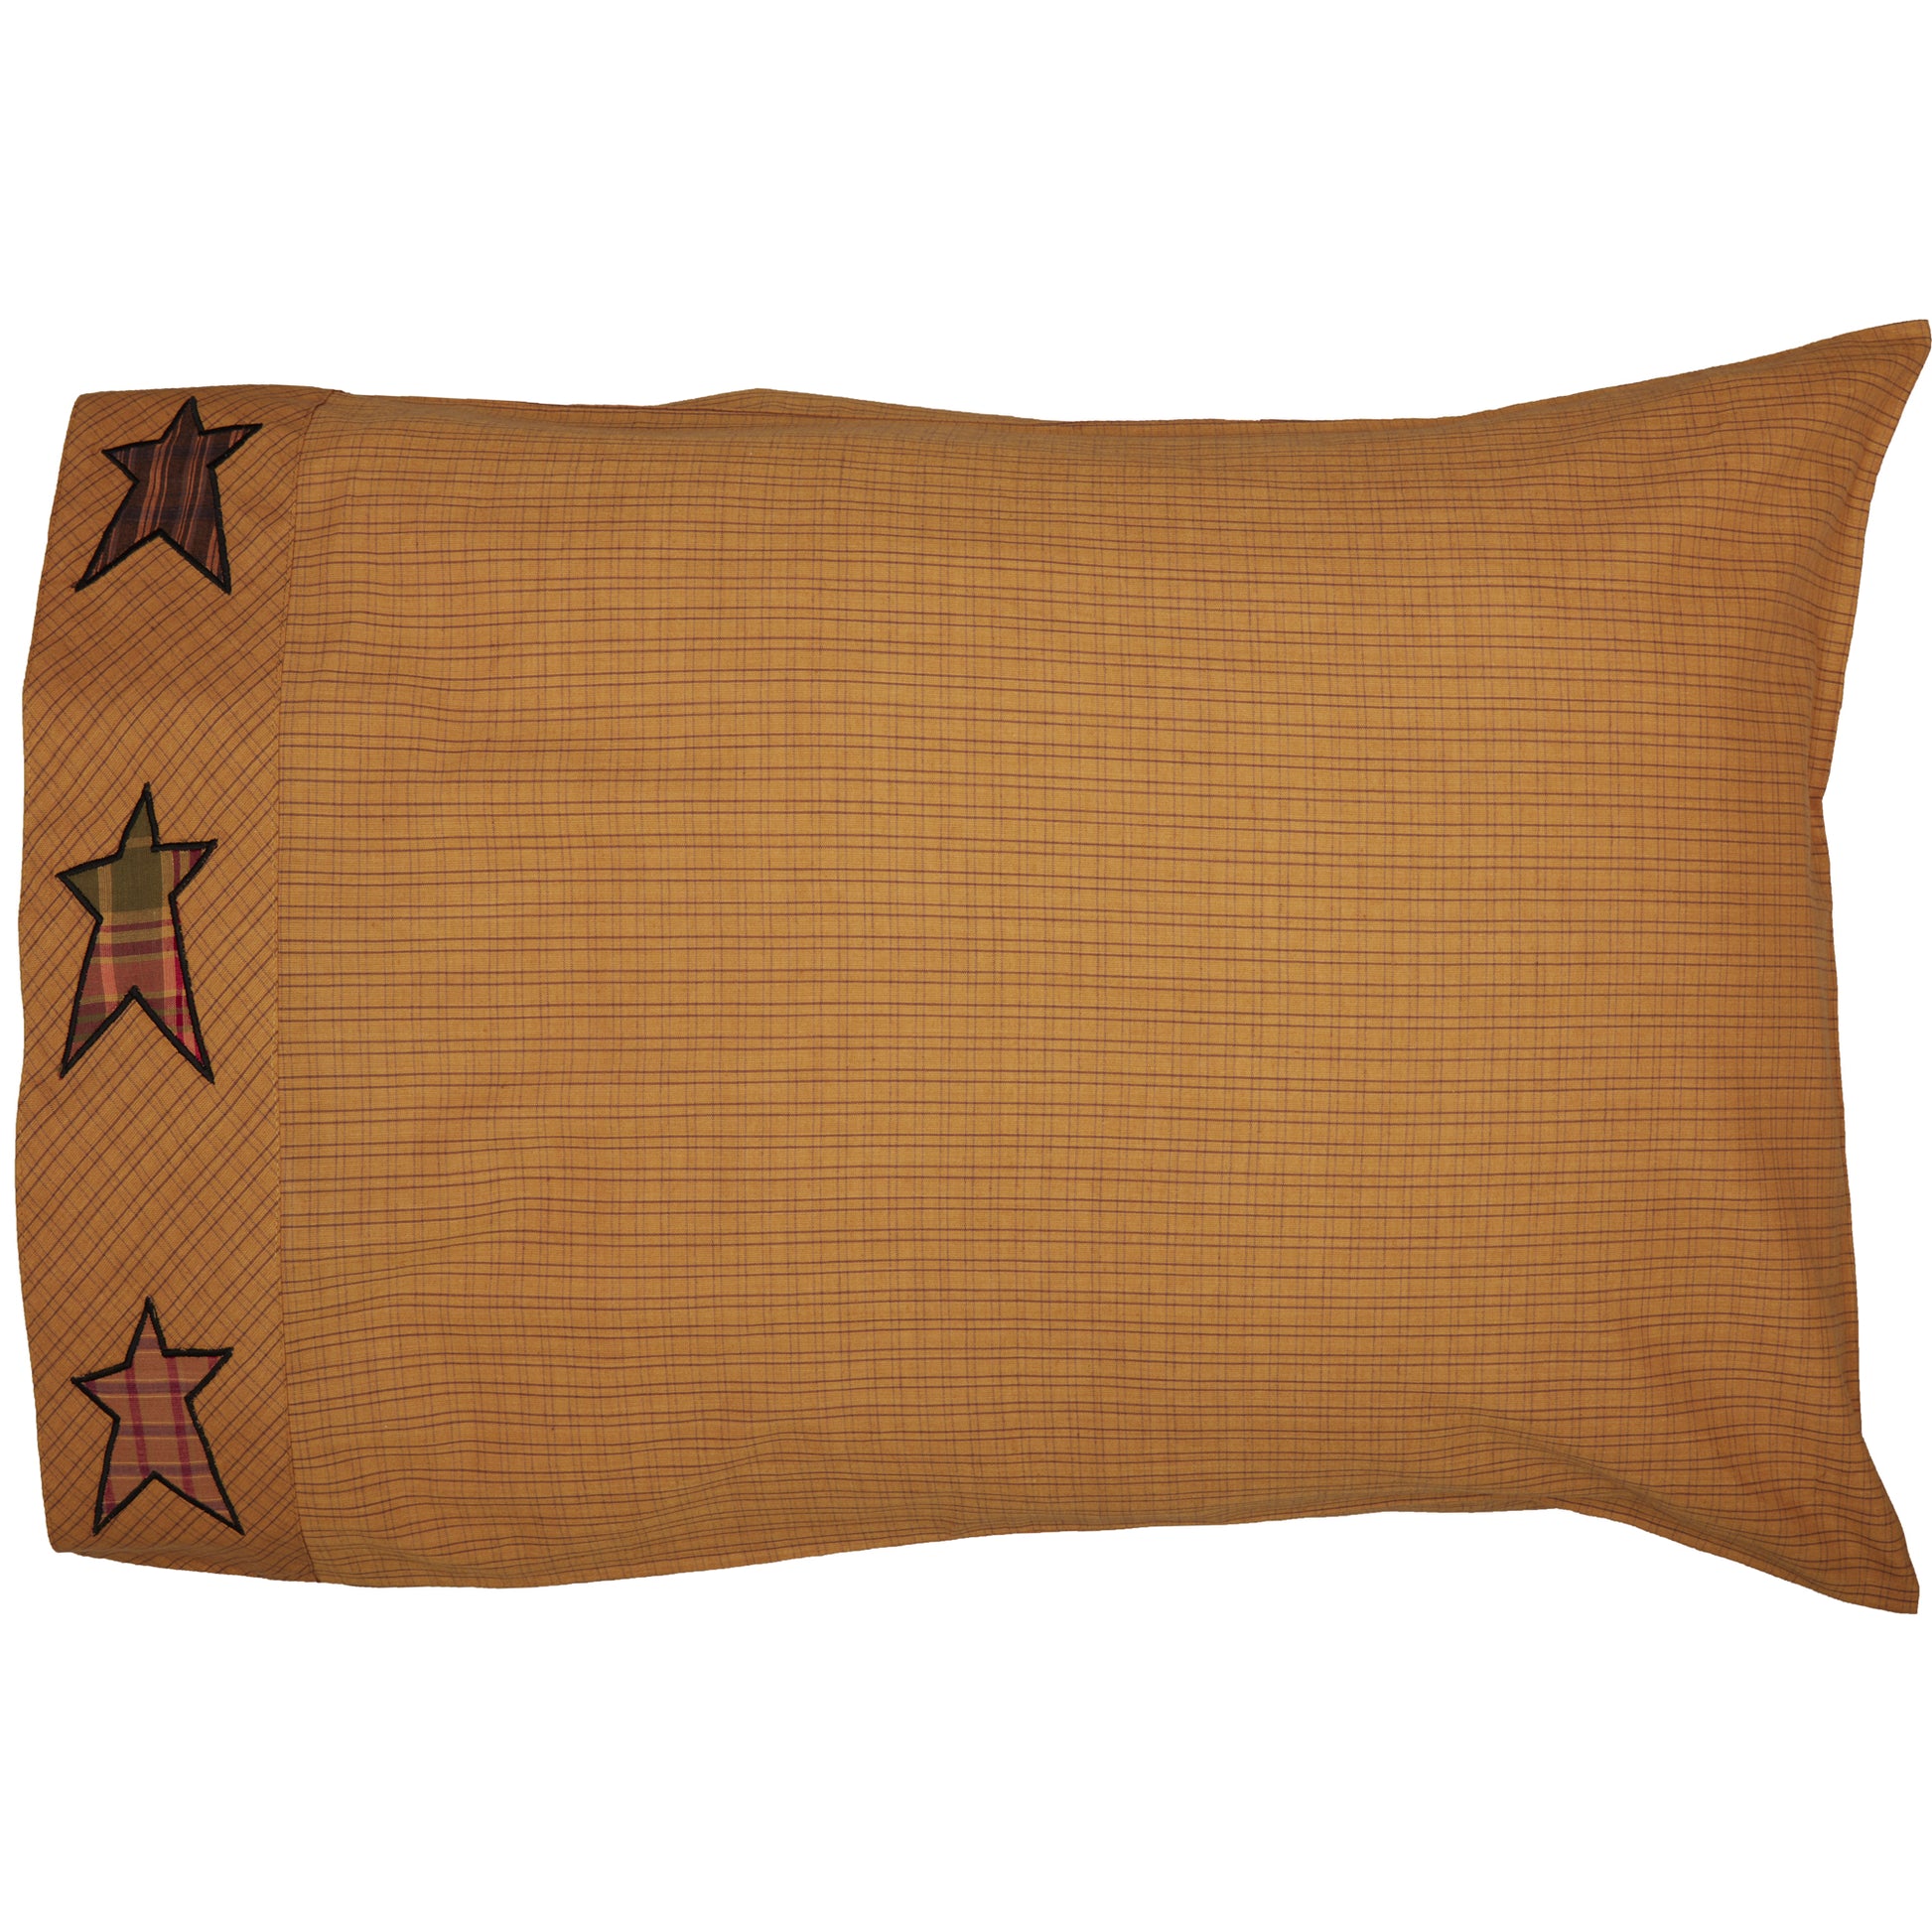 56783-Stratton-Standard-Pillow-Case-w-Applique-Star-Set-of-2-21x30-image-2